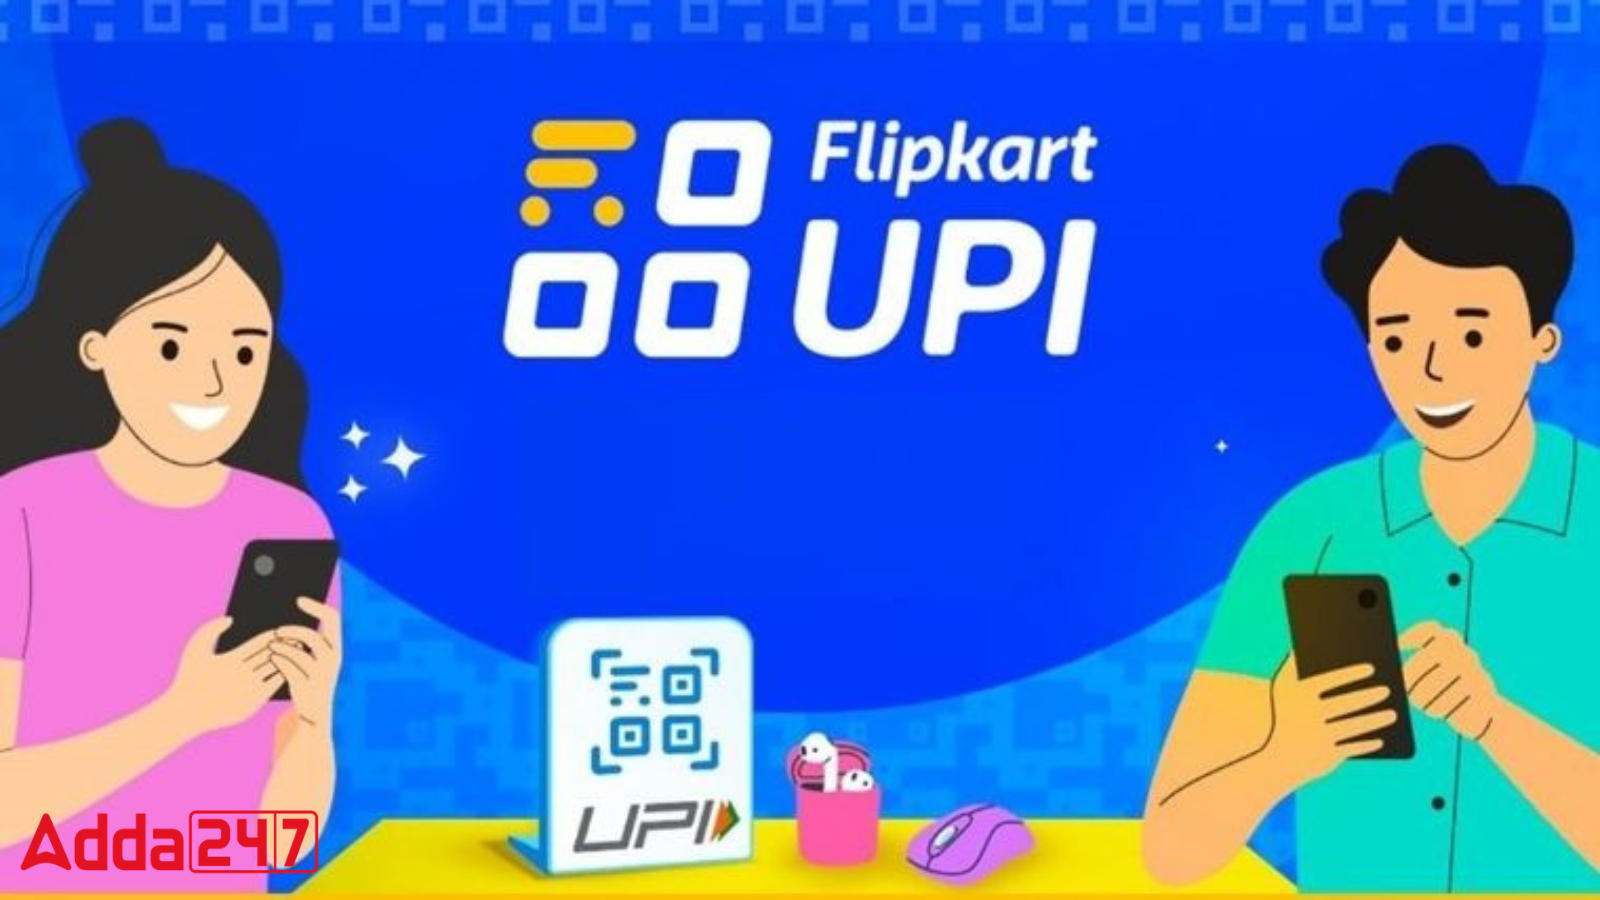 Flipkart Introduces Its Digital Payments Solution, Flipkart UPI